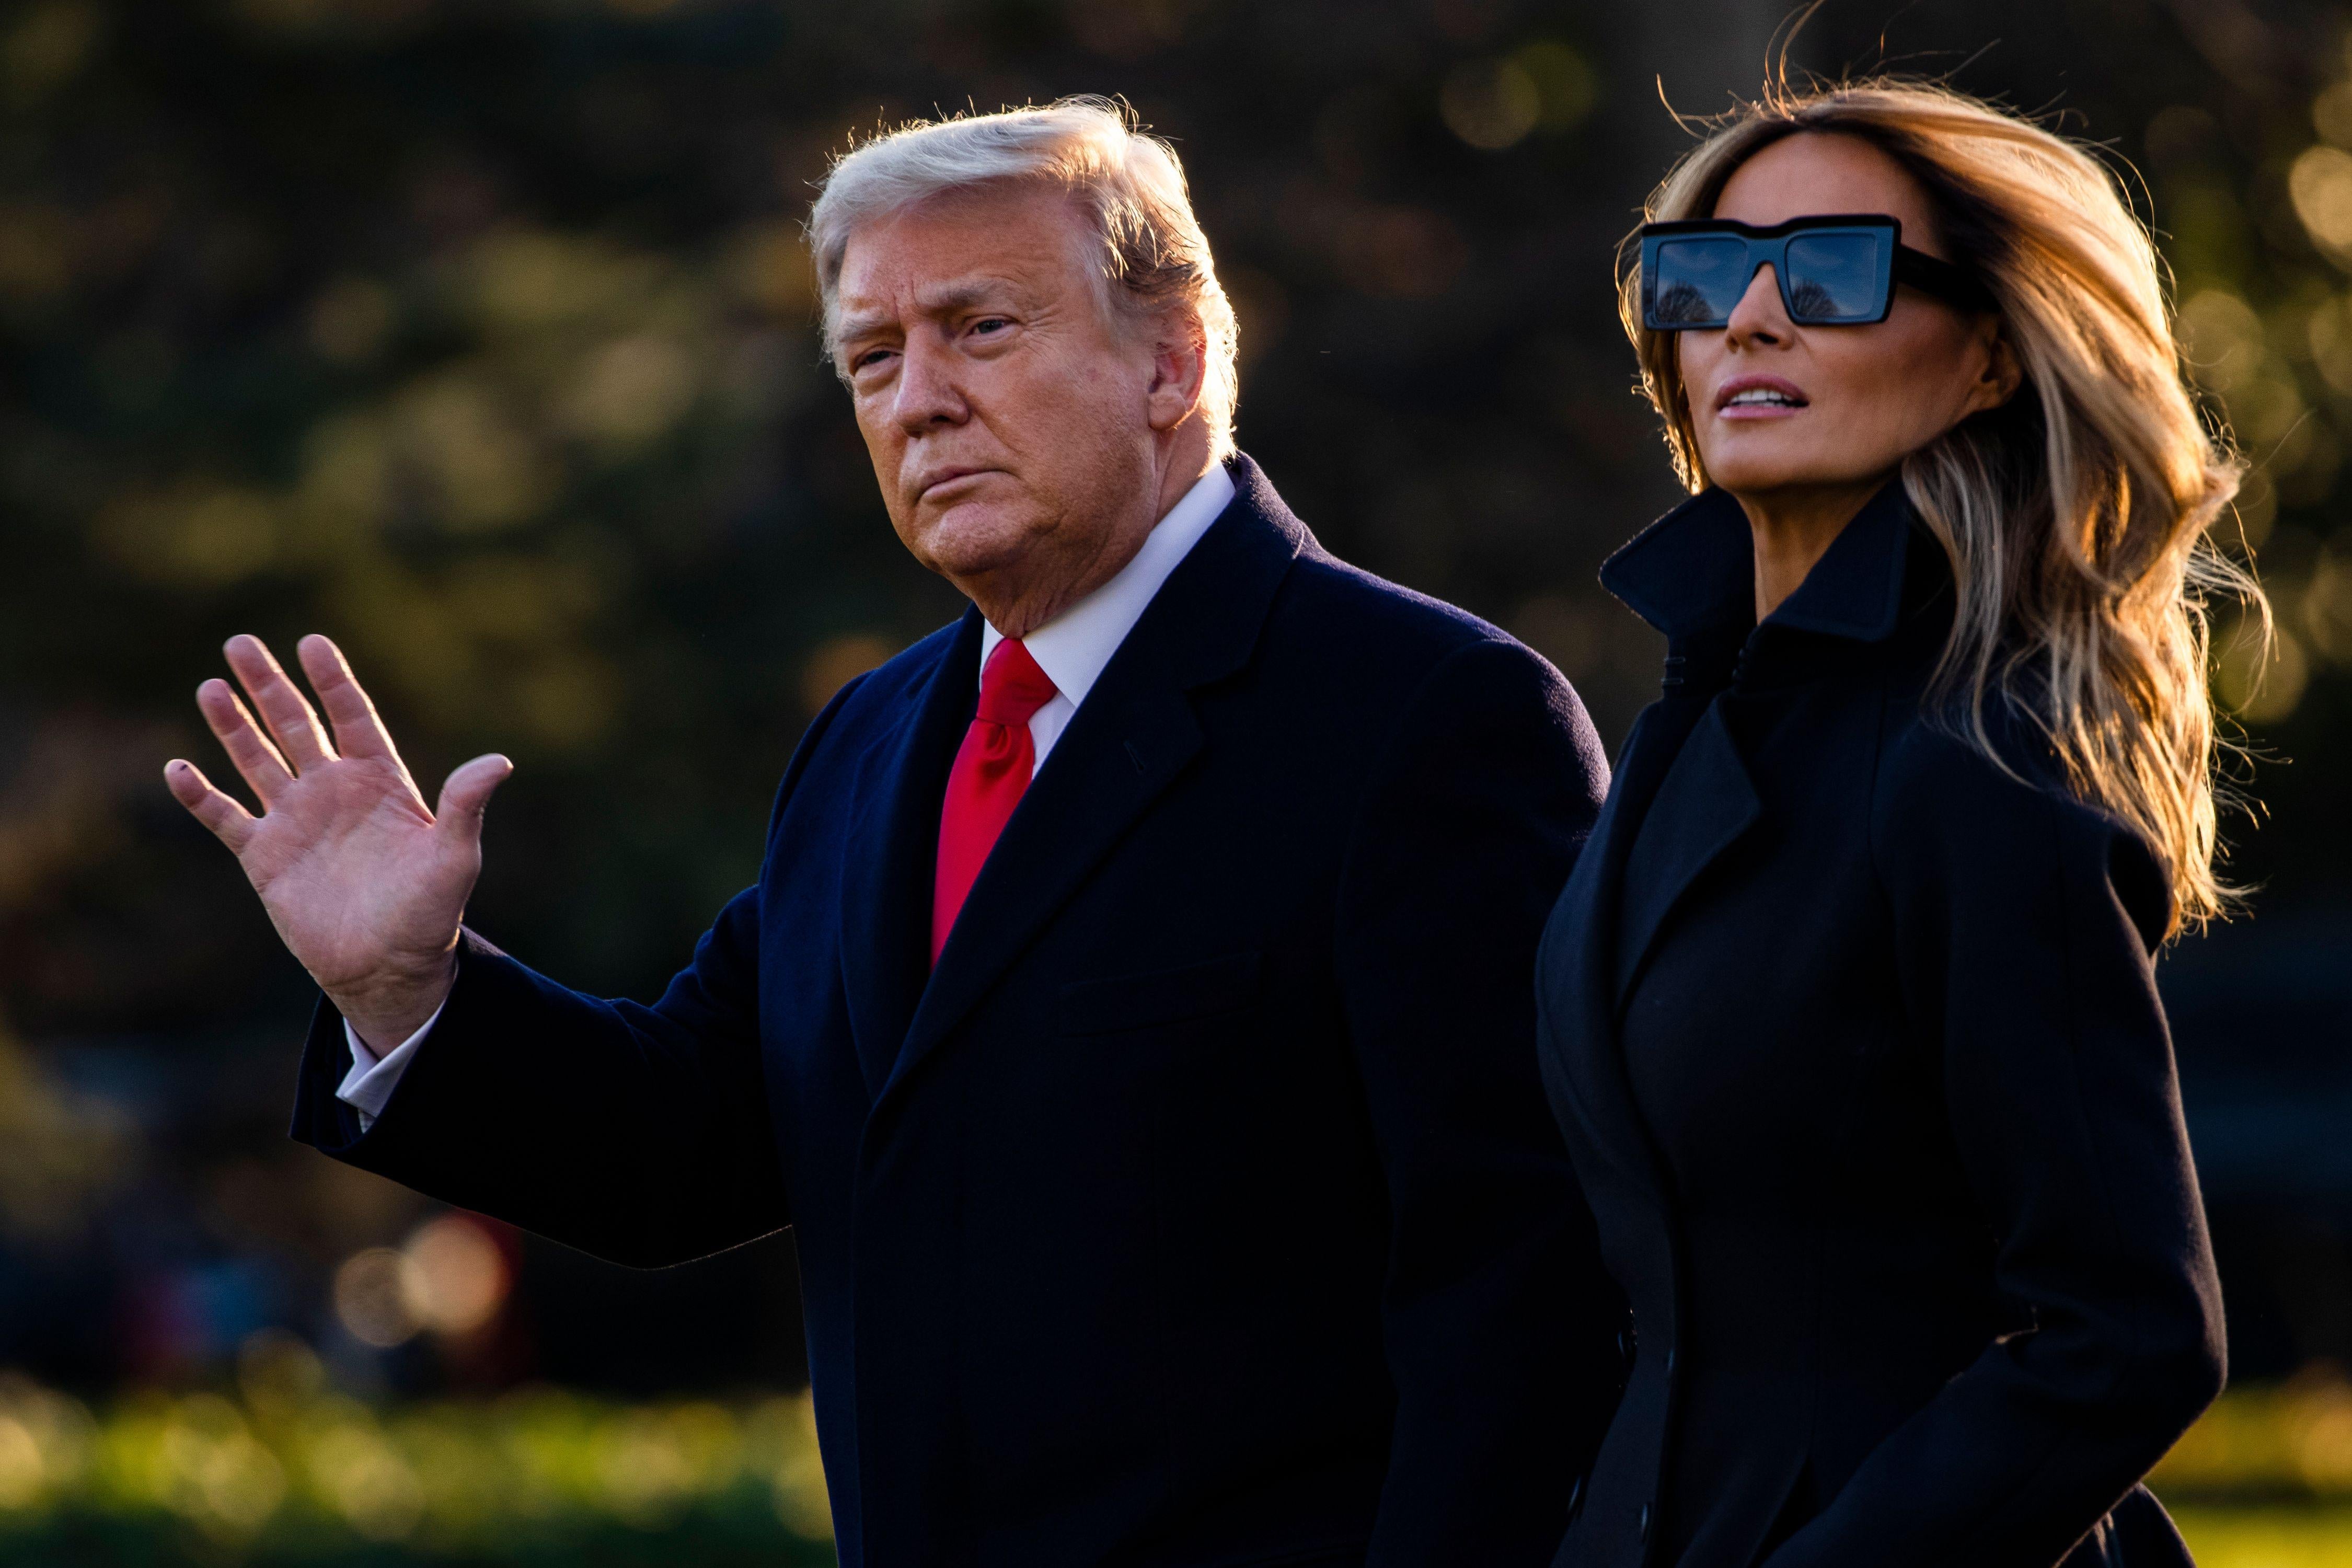 Trump waving next to Melania, in sunglasses